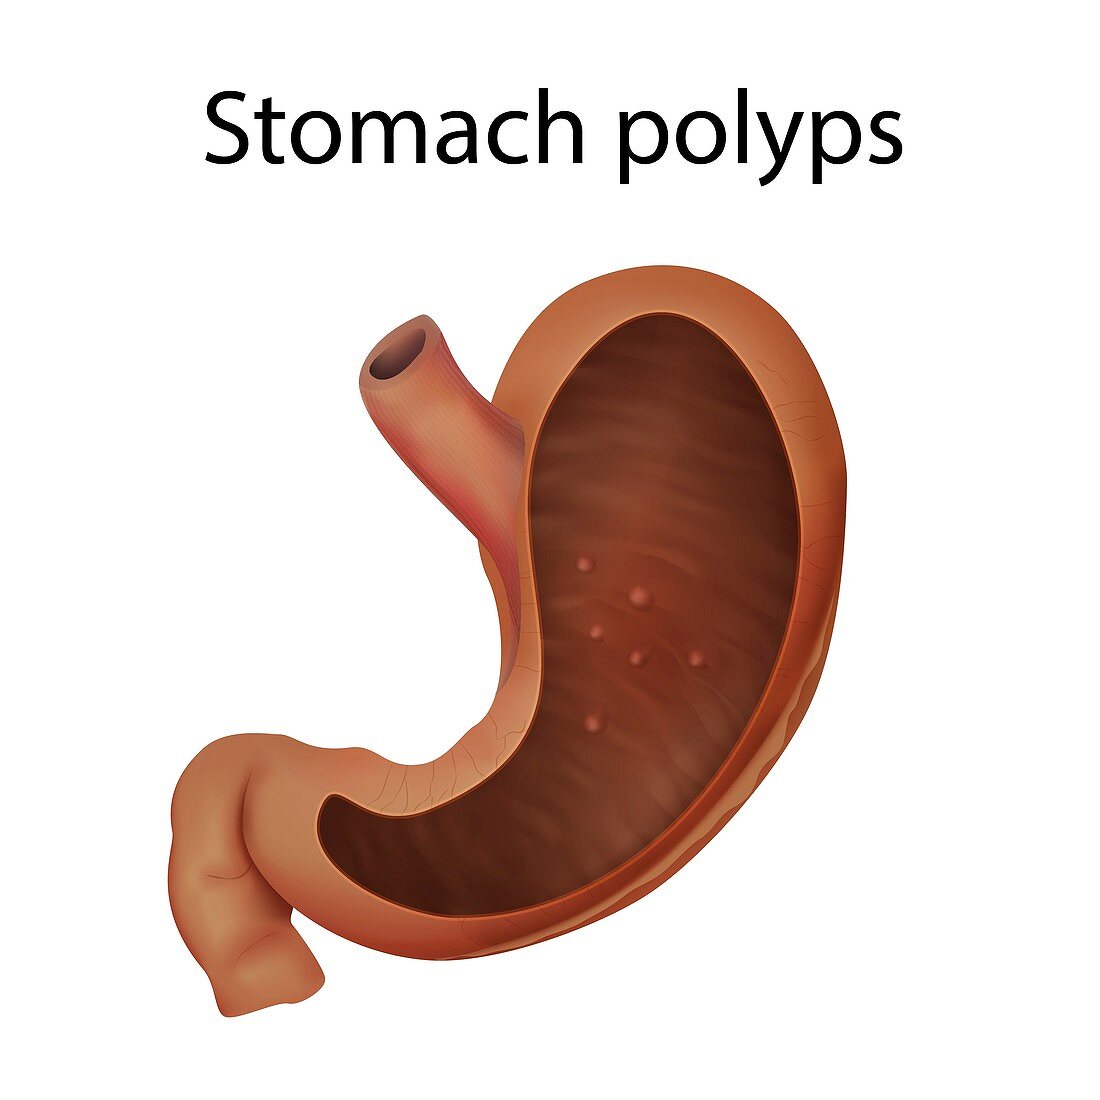 Stomach polyps, illustration